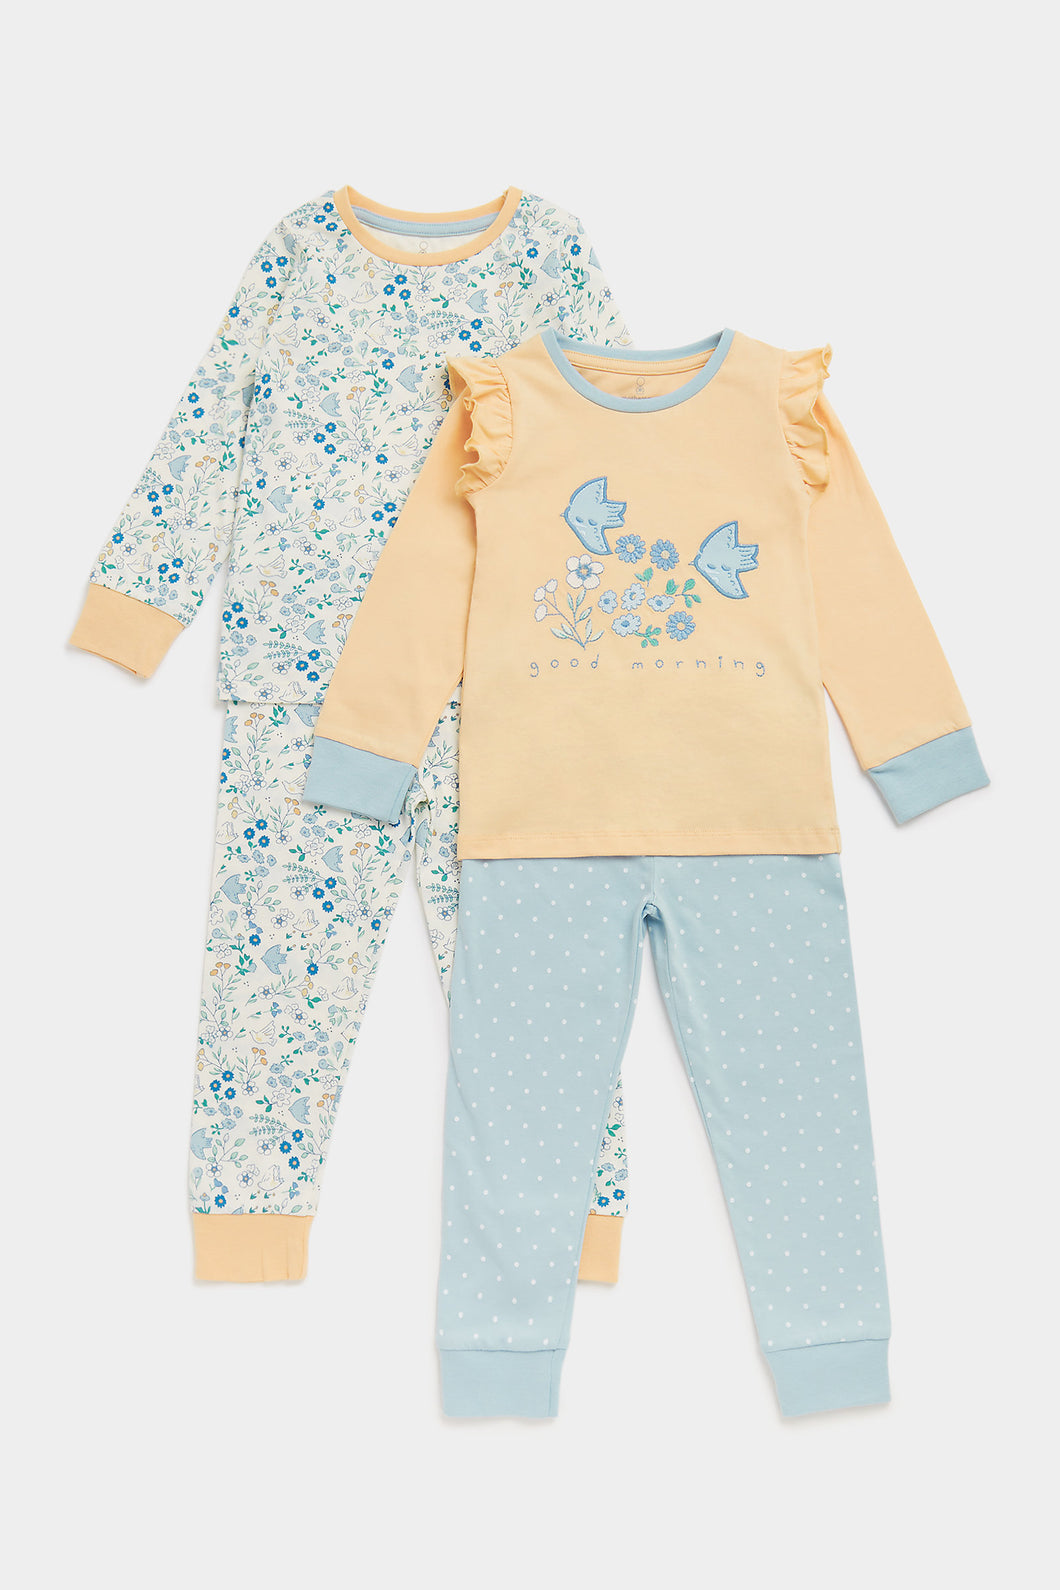 Mothercare Good Morning Pyjamas - 2 Pack